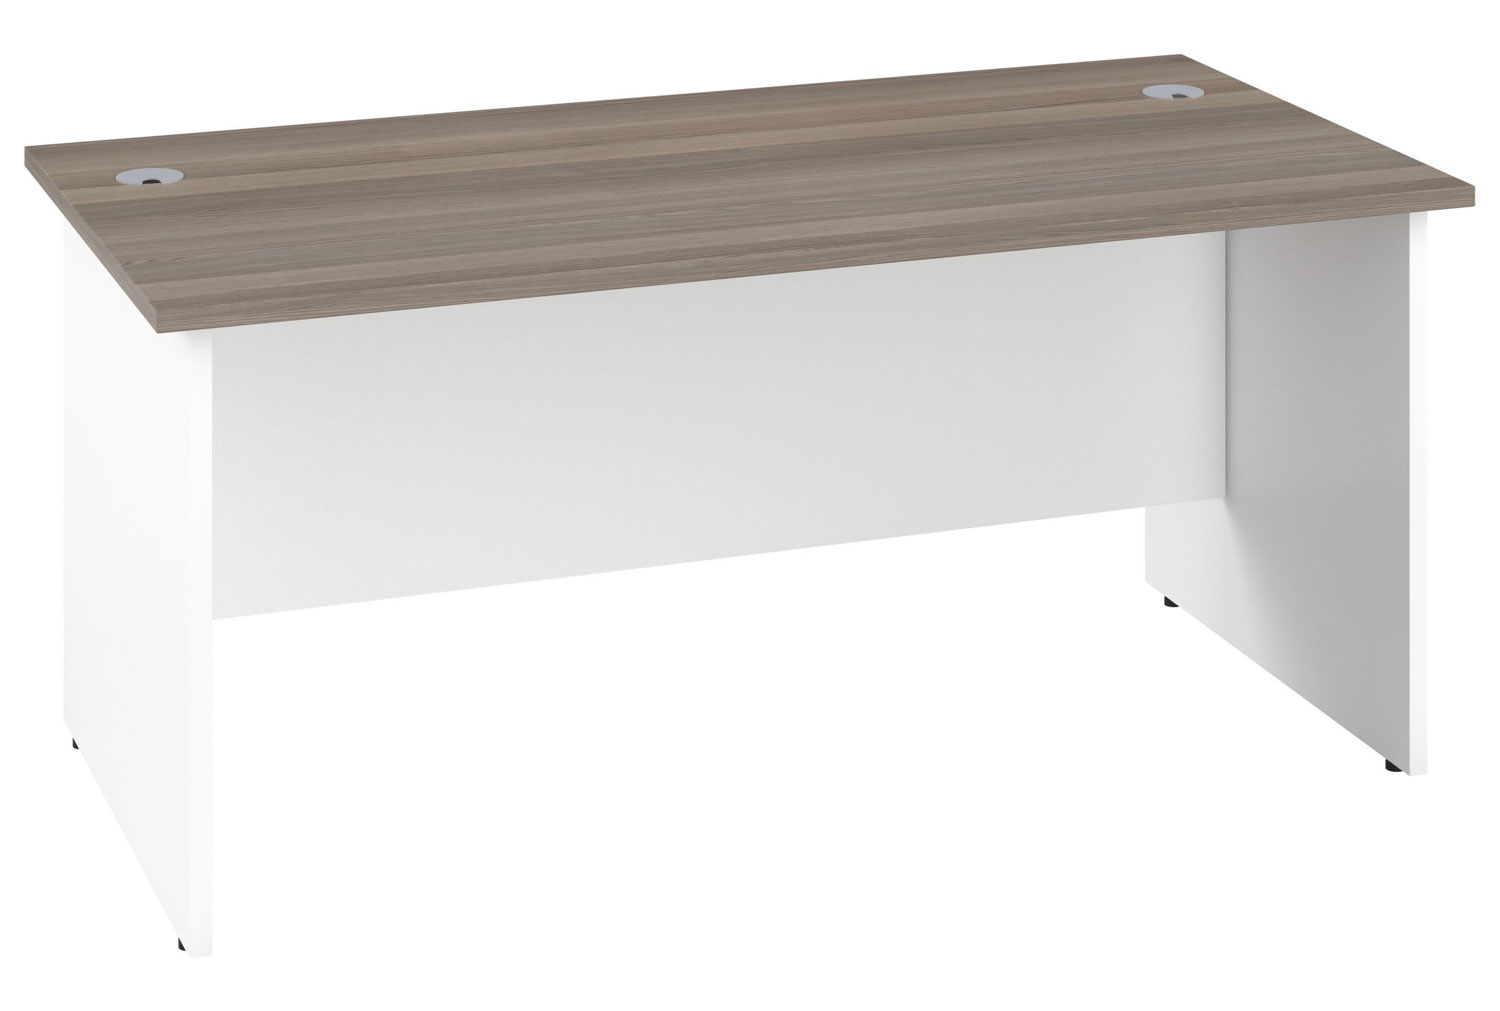 Progress Duo Panel End Rectangular Office Desk, 160wx80dx73h (cm), Grey Oak